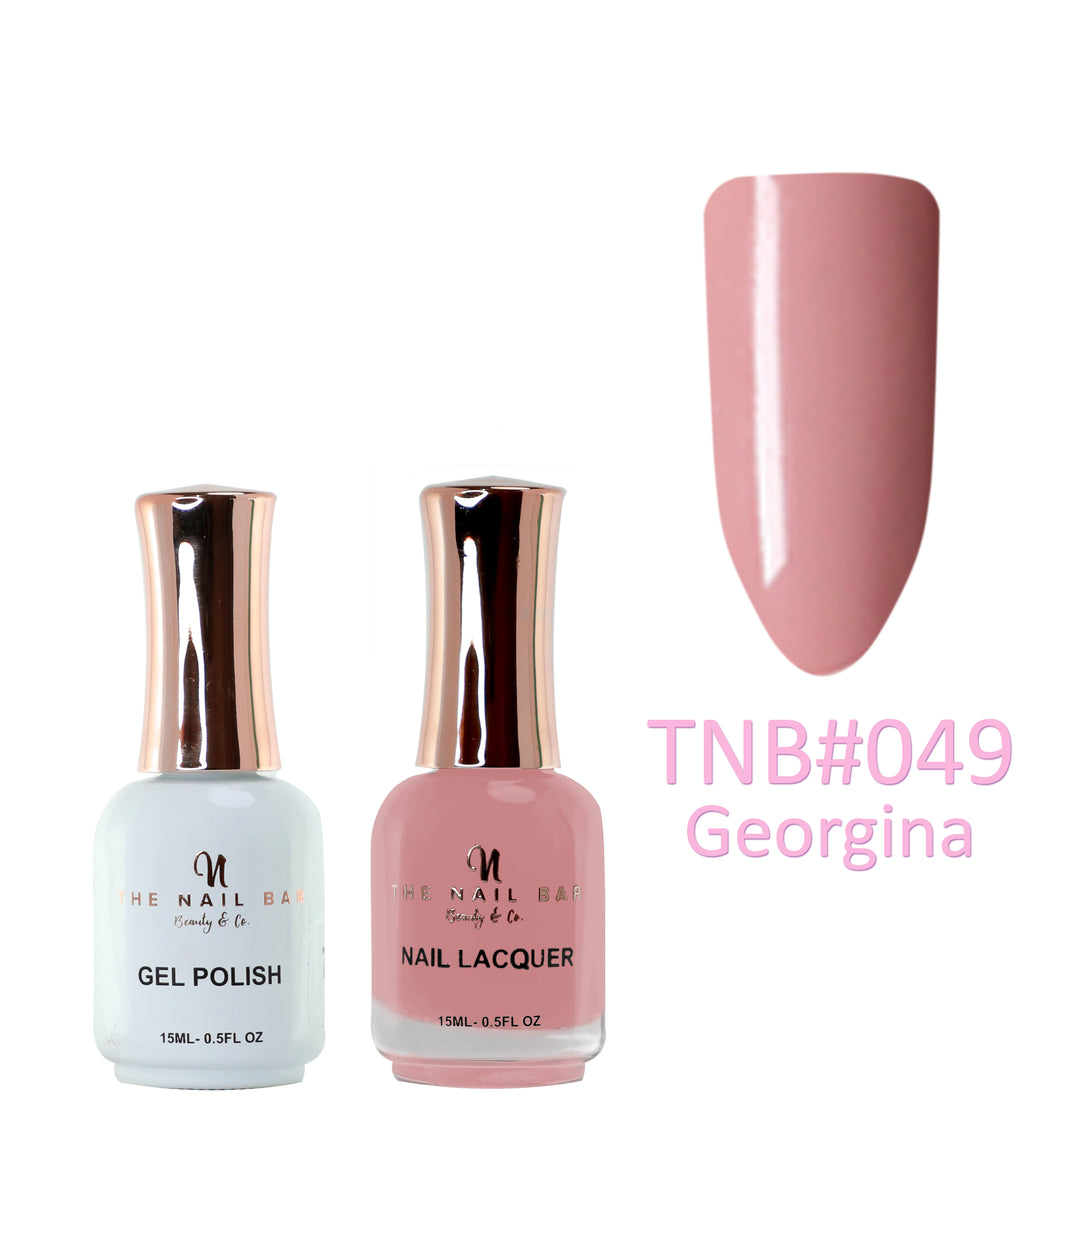 Dual Polish/Gel colour matching (15ml) - Georgina - The Nail Bar Beauty & Co.